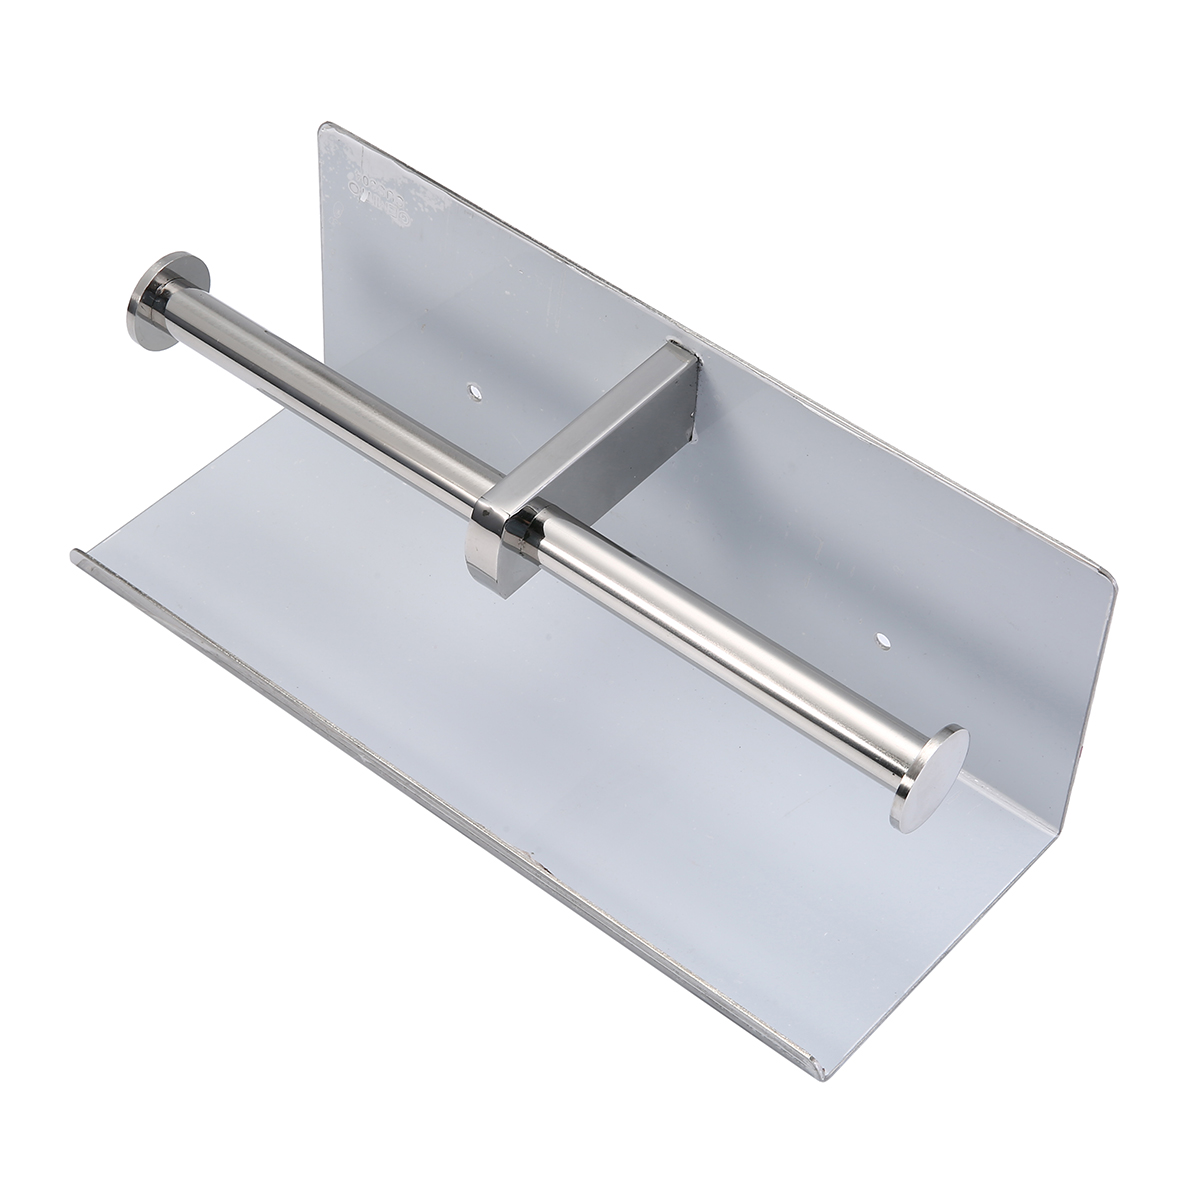 Stainless-Steel-Toilet-Paper-Double-Roll-Holder-Bathroom-Wall-Mount-Paper-Shelf-Holder-Home-1523904-5